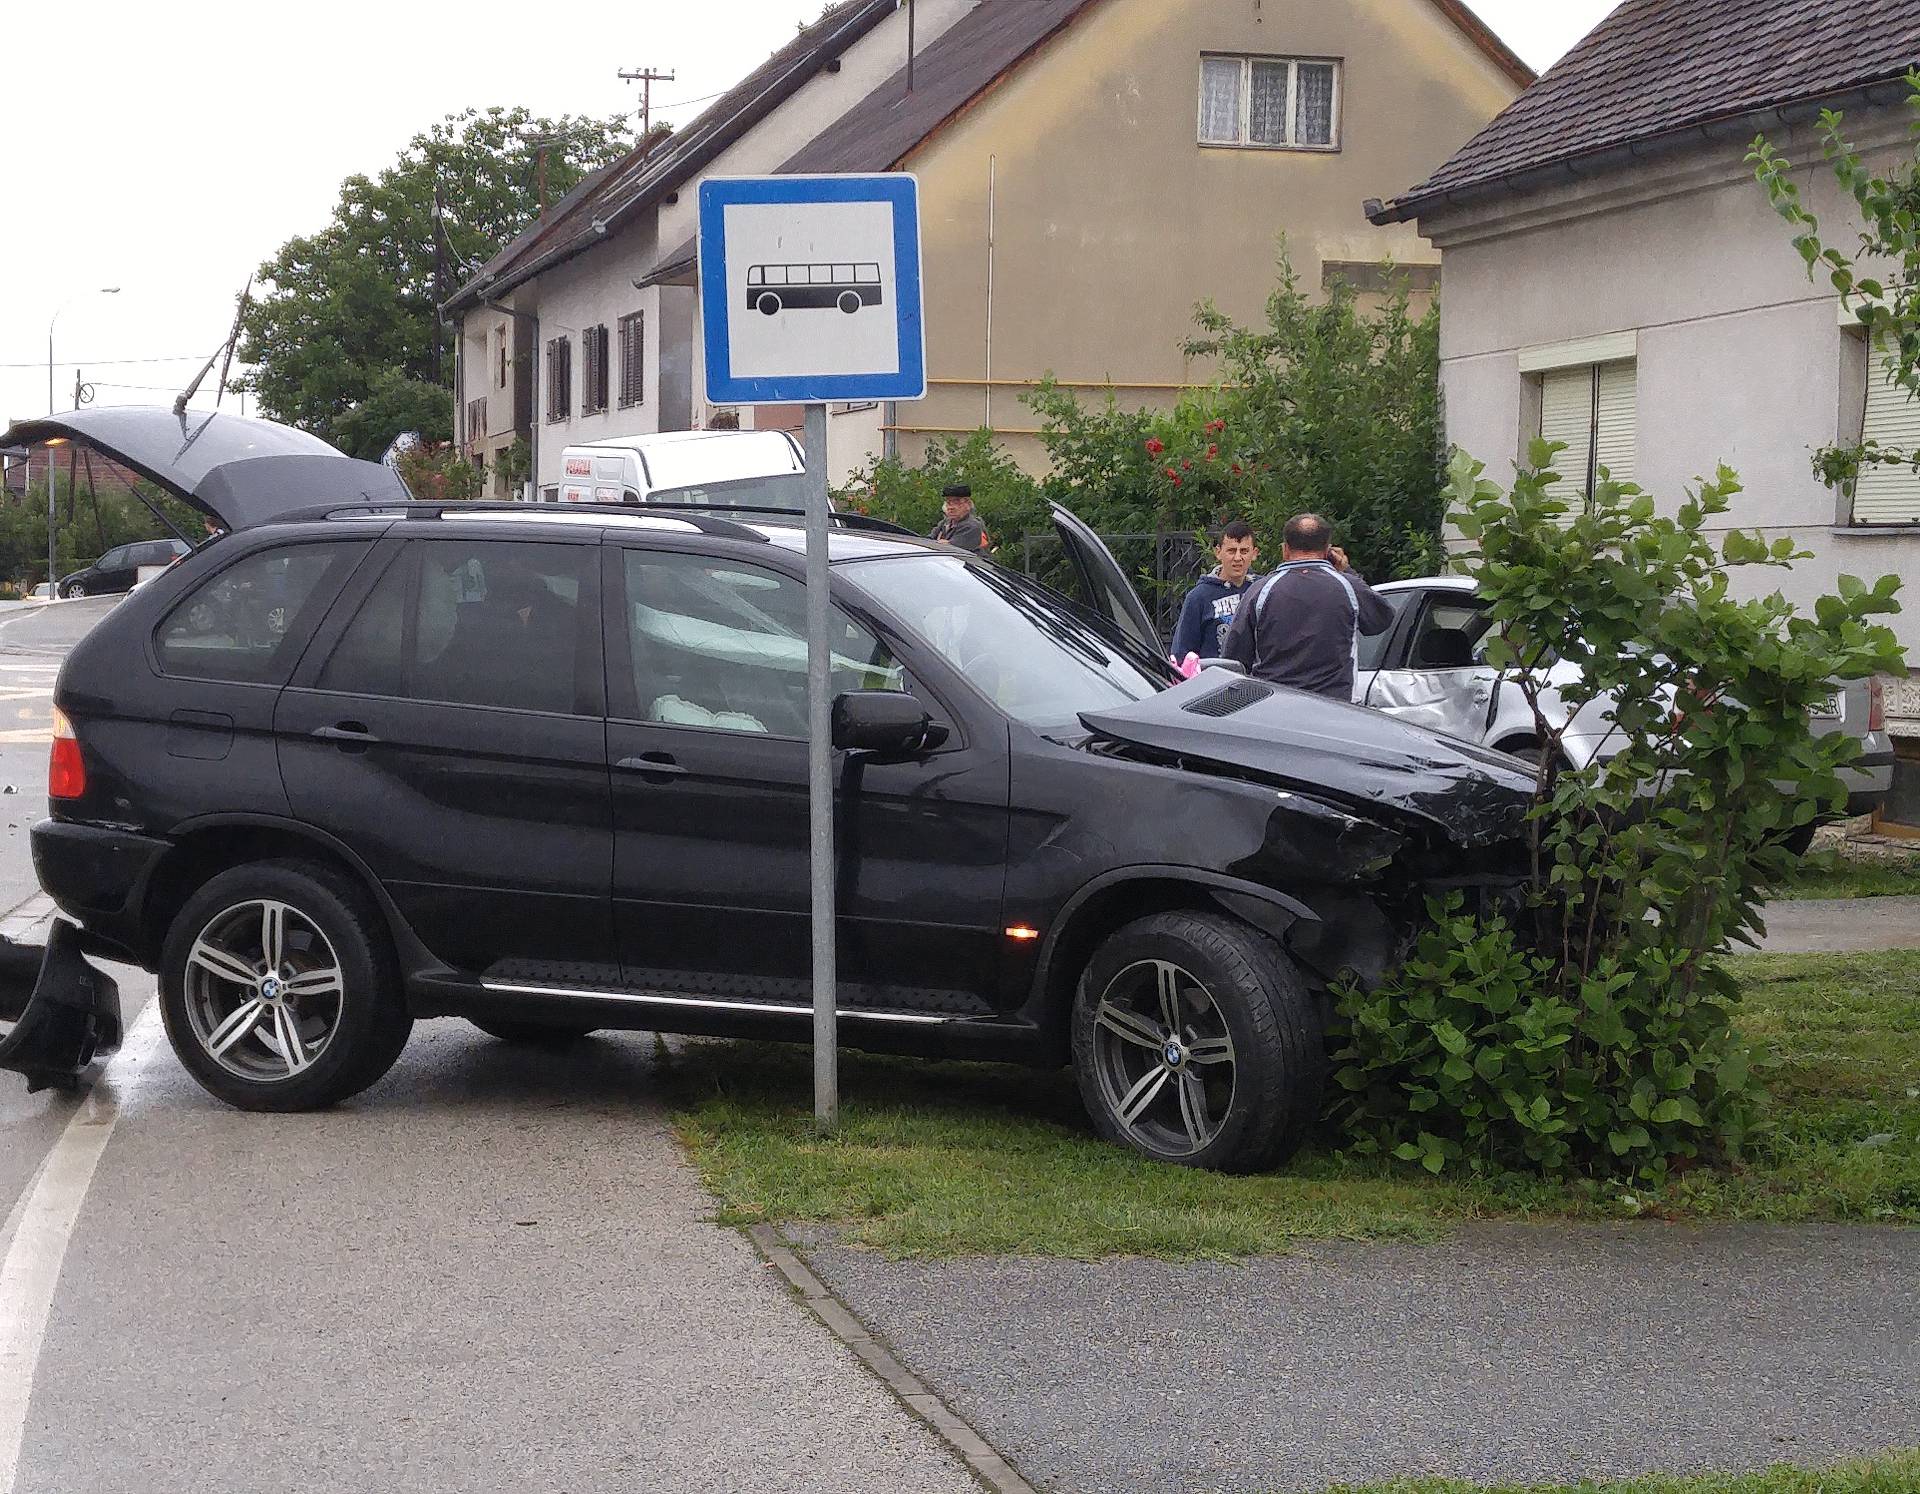 Išli na svadbu: BMW-om sletio s ceste, udario u kombi i znak